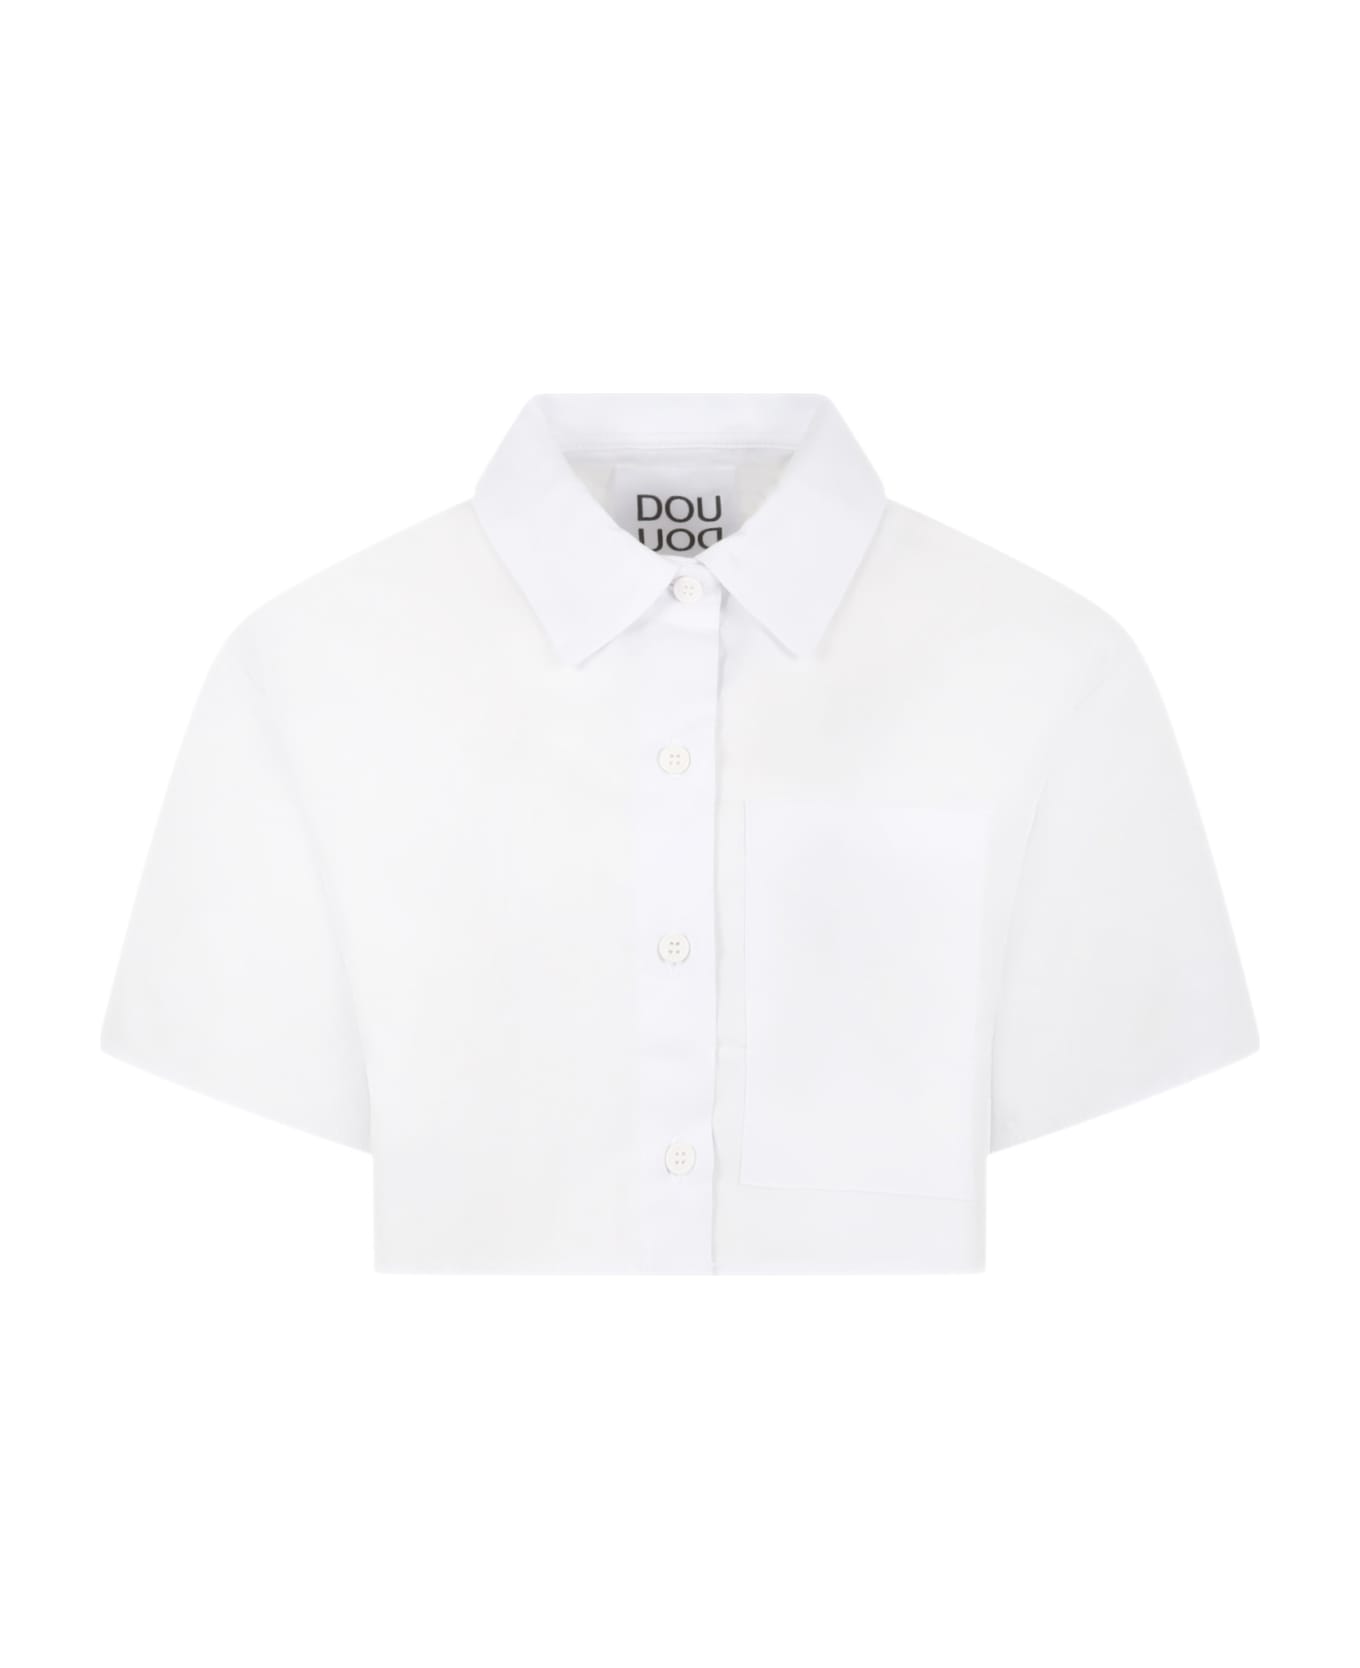 Douuod White Shirt For Girl With Black Logo - White